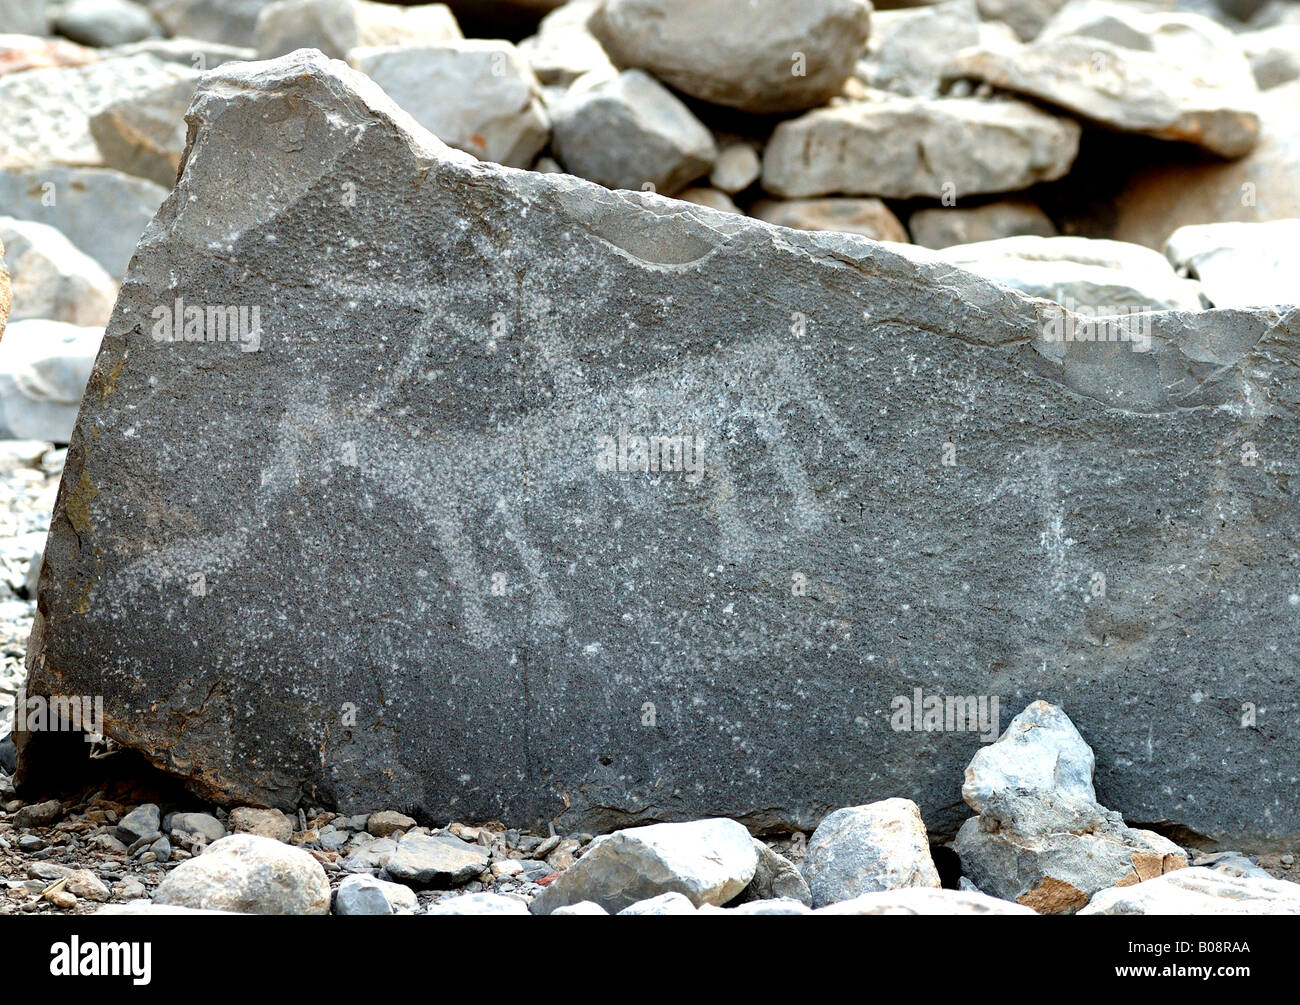 Rock carvings, petroglyphs, Tawi, Musandam, Oman, Middle East Stock Photo